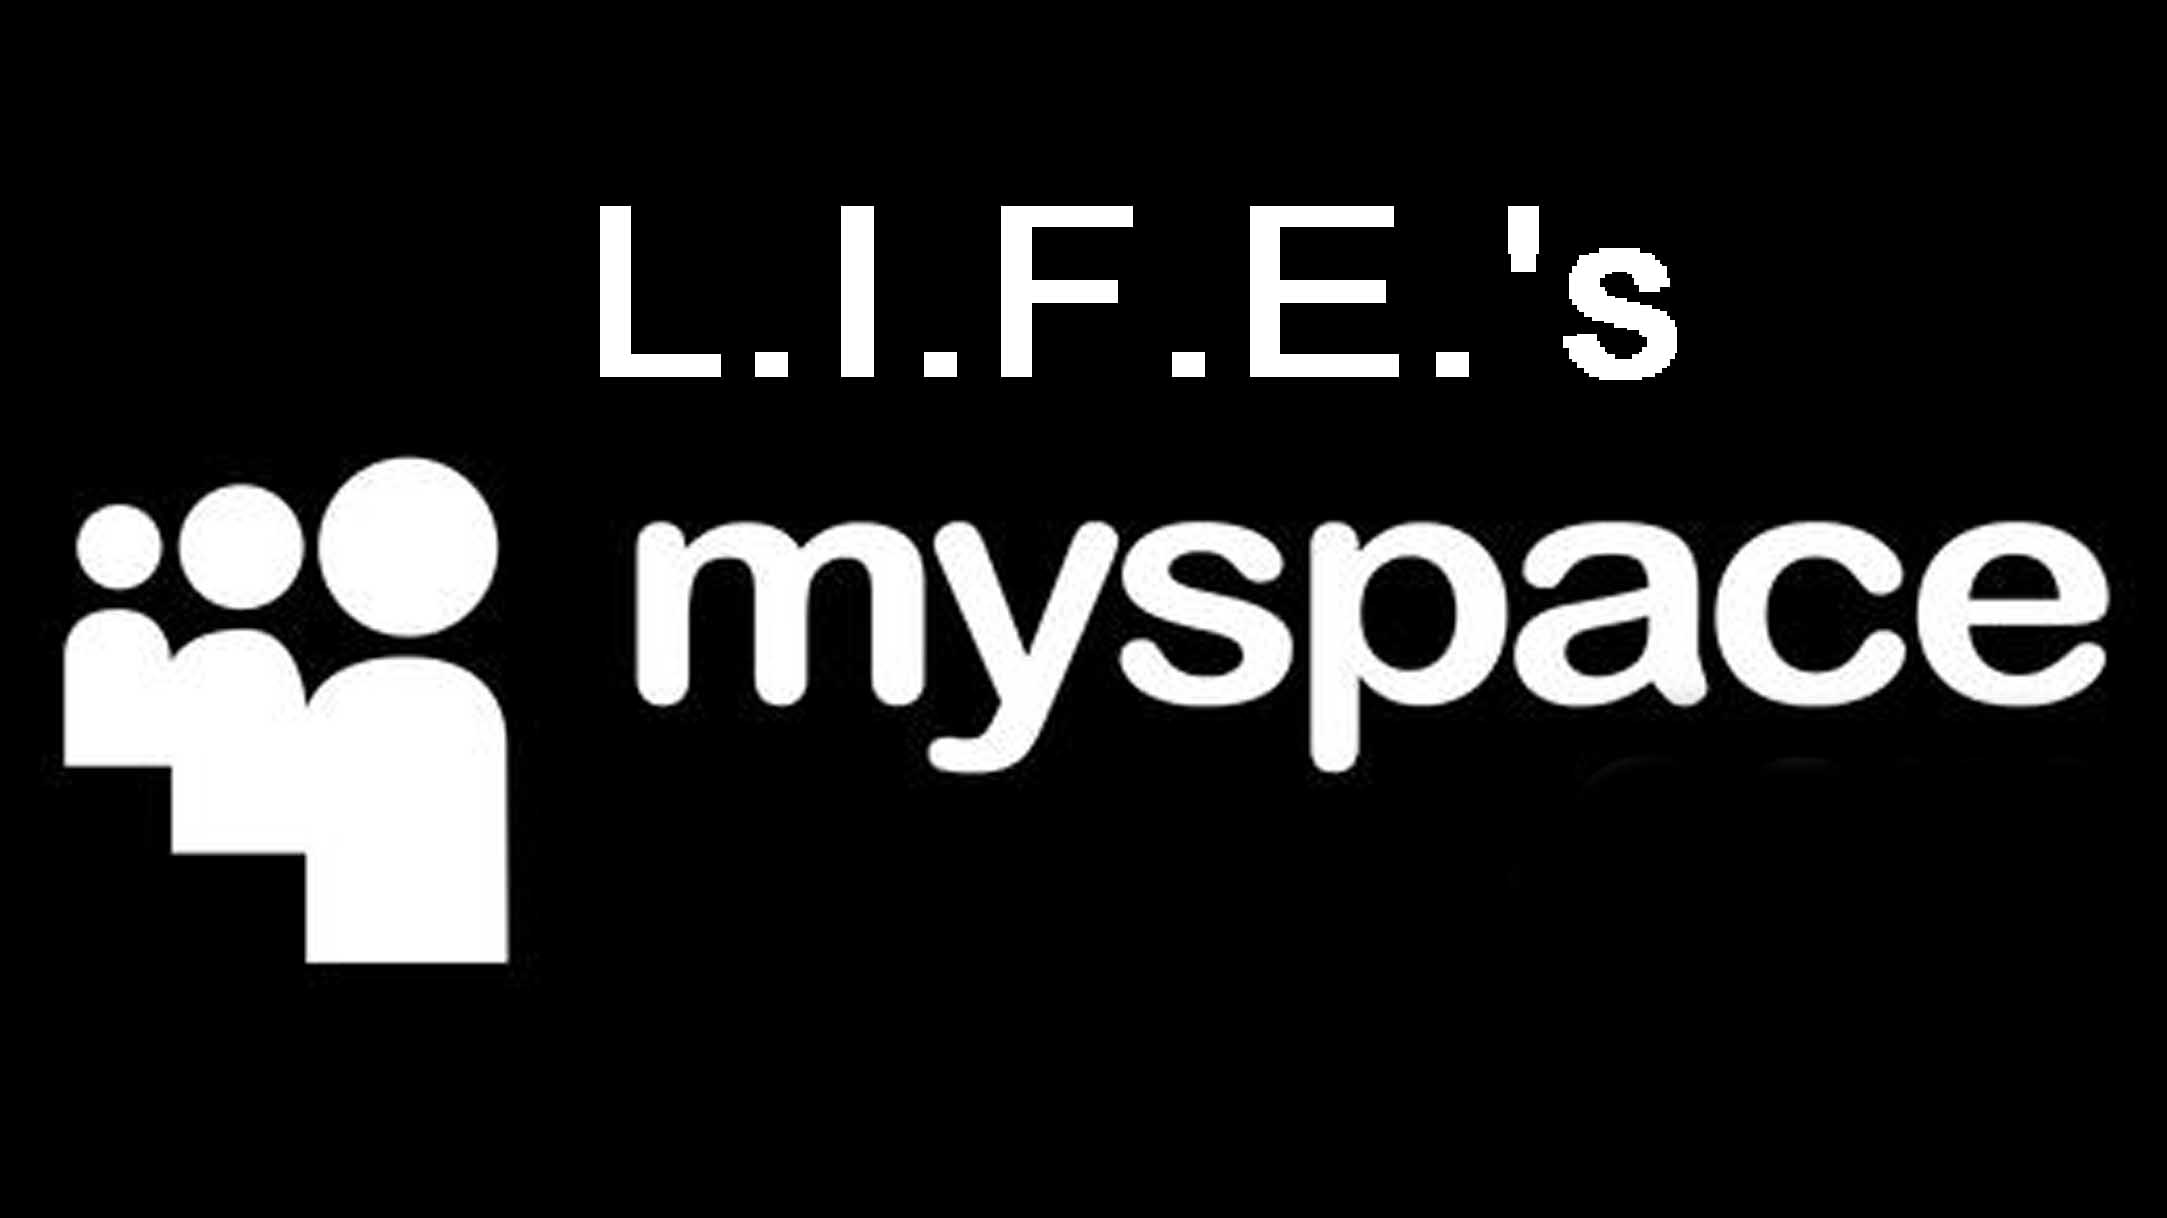 Myspace Logo Pics